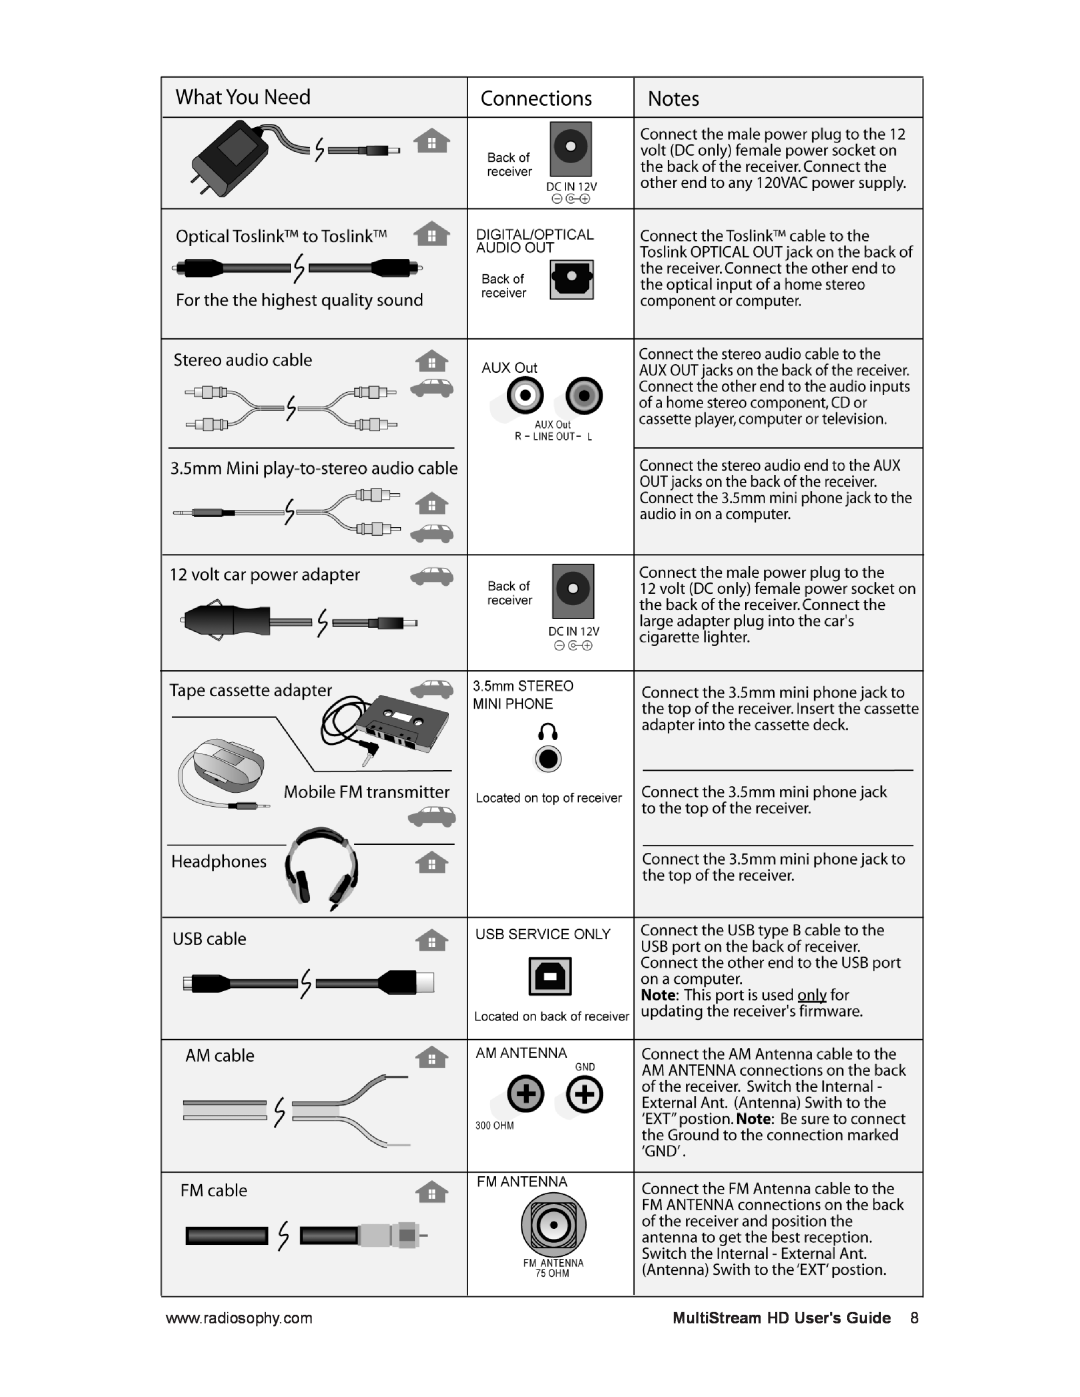 RCA MPA0001 manual MultiStream HD Users Guide 